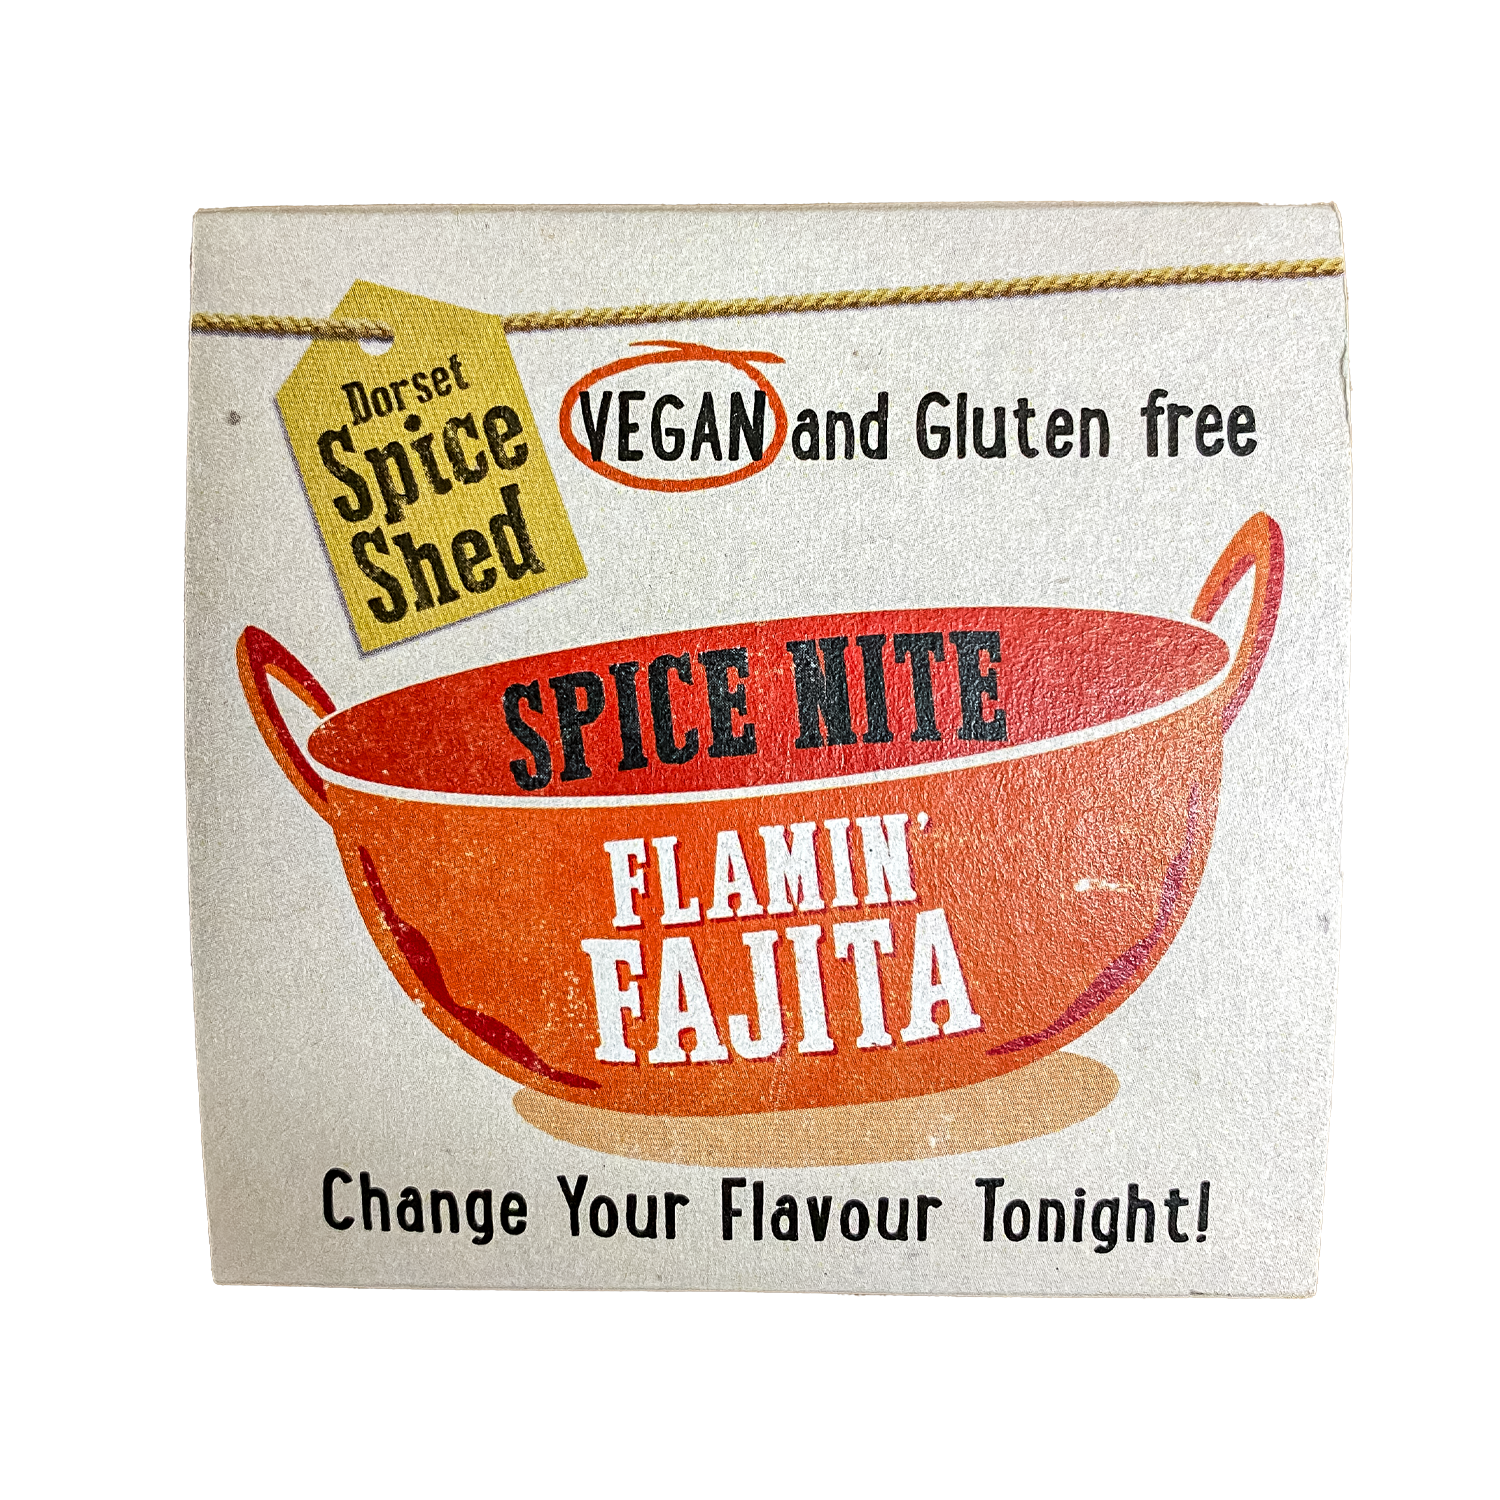 Dorset Spice Shed Spice Nite Flamin' Fajita 